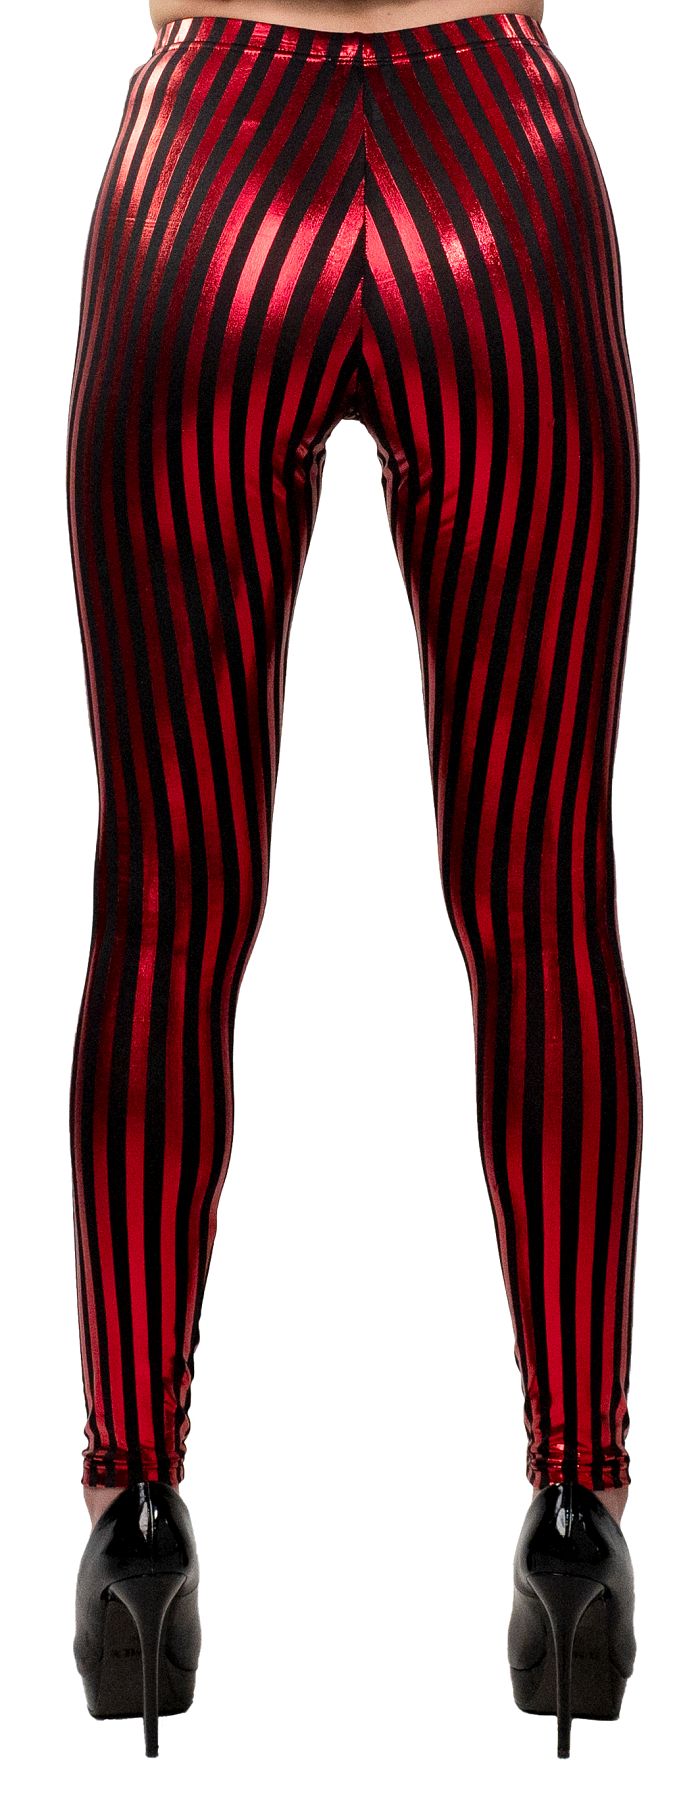 Leggings Streifen, rot/schwarz